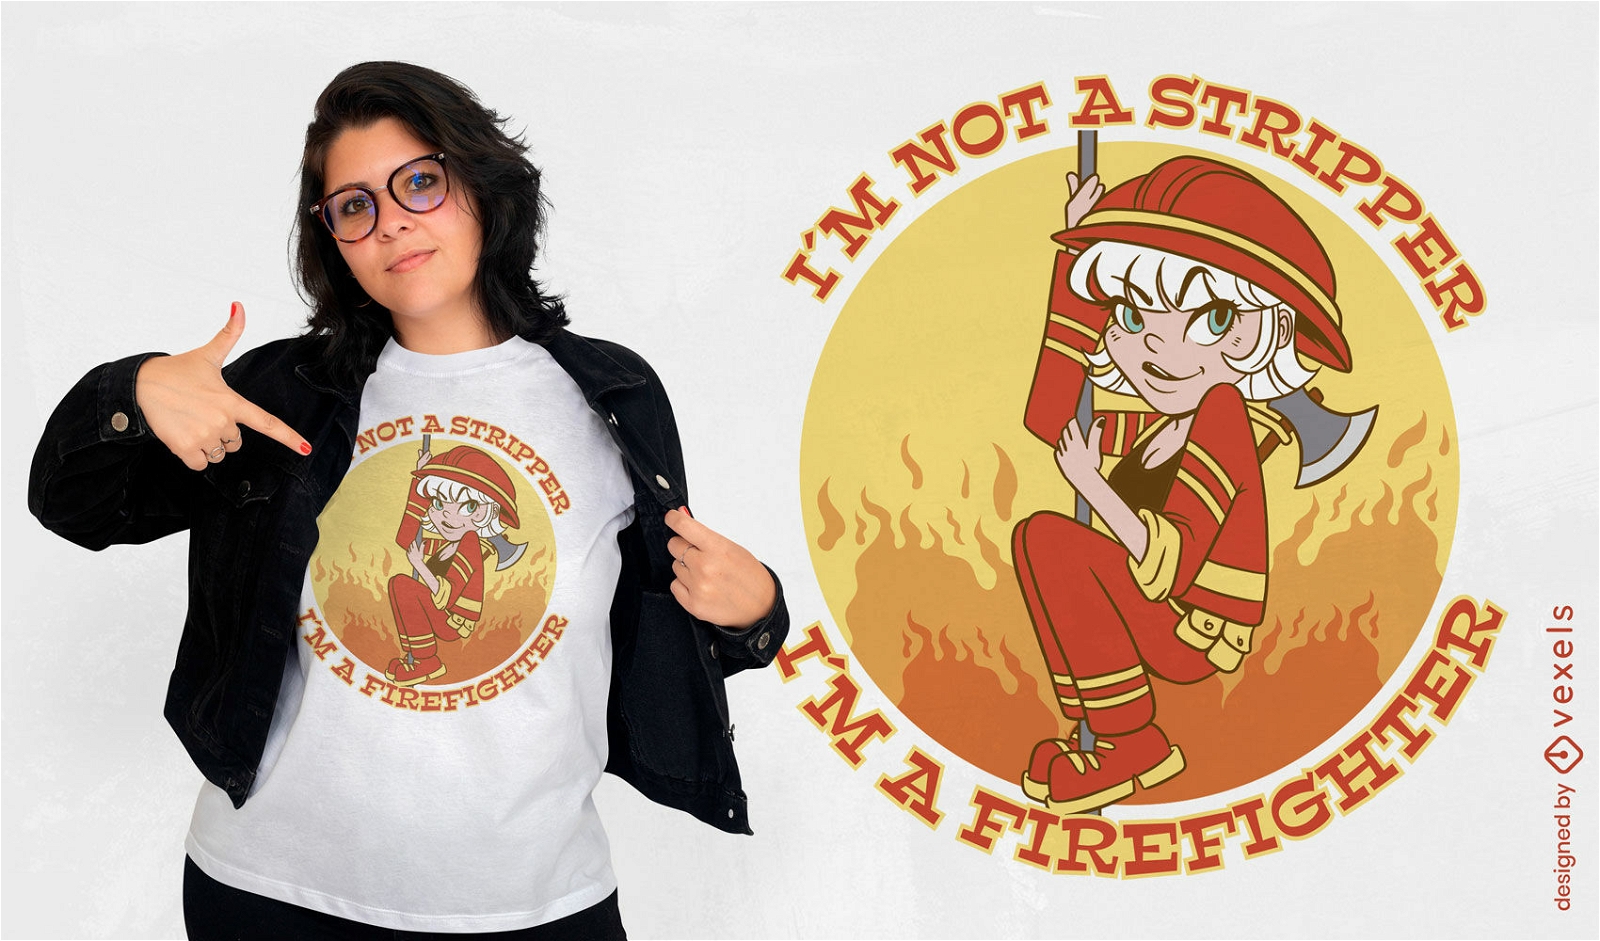 Lustiger Zitat-T-Shirt Entwurf der Feuerwehrmann-Frau